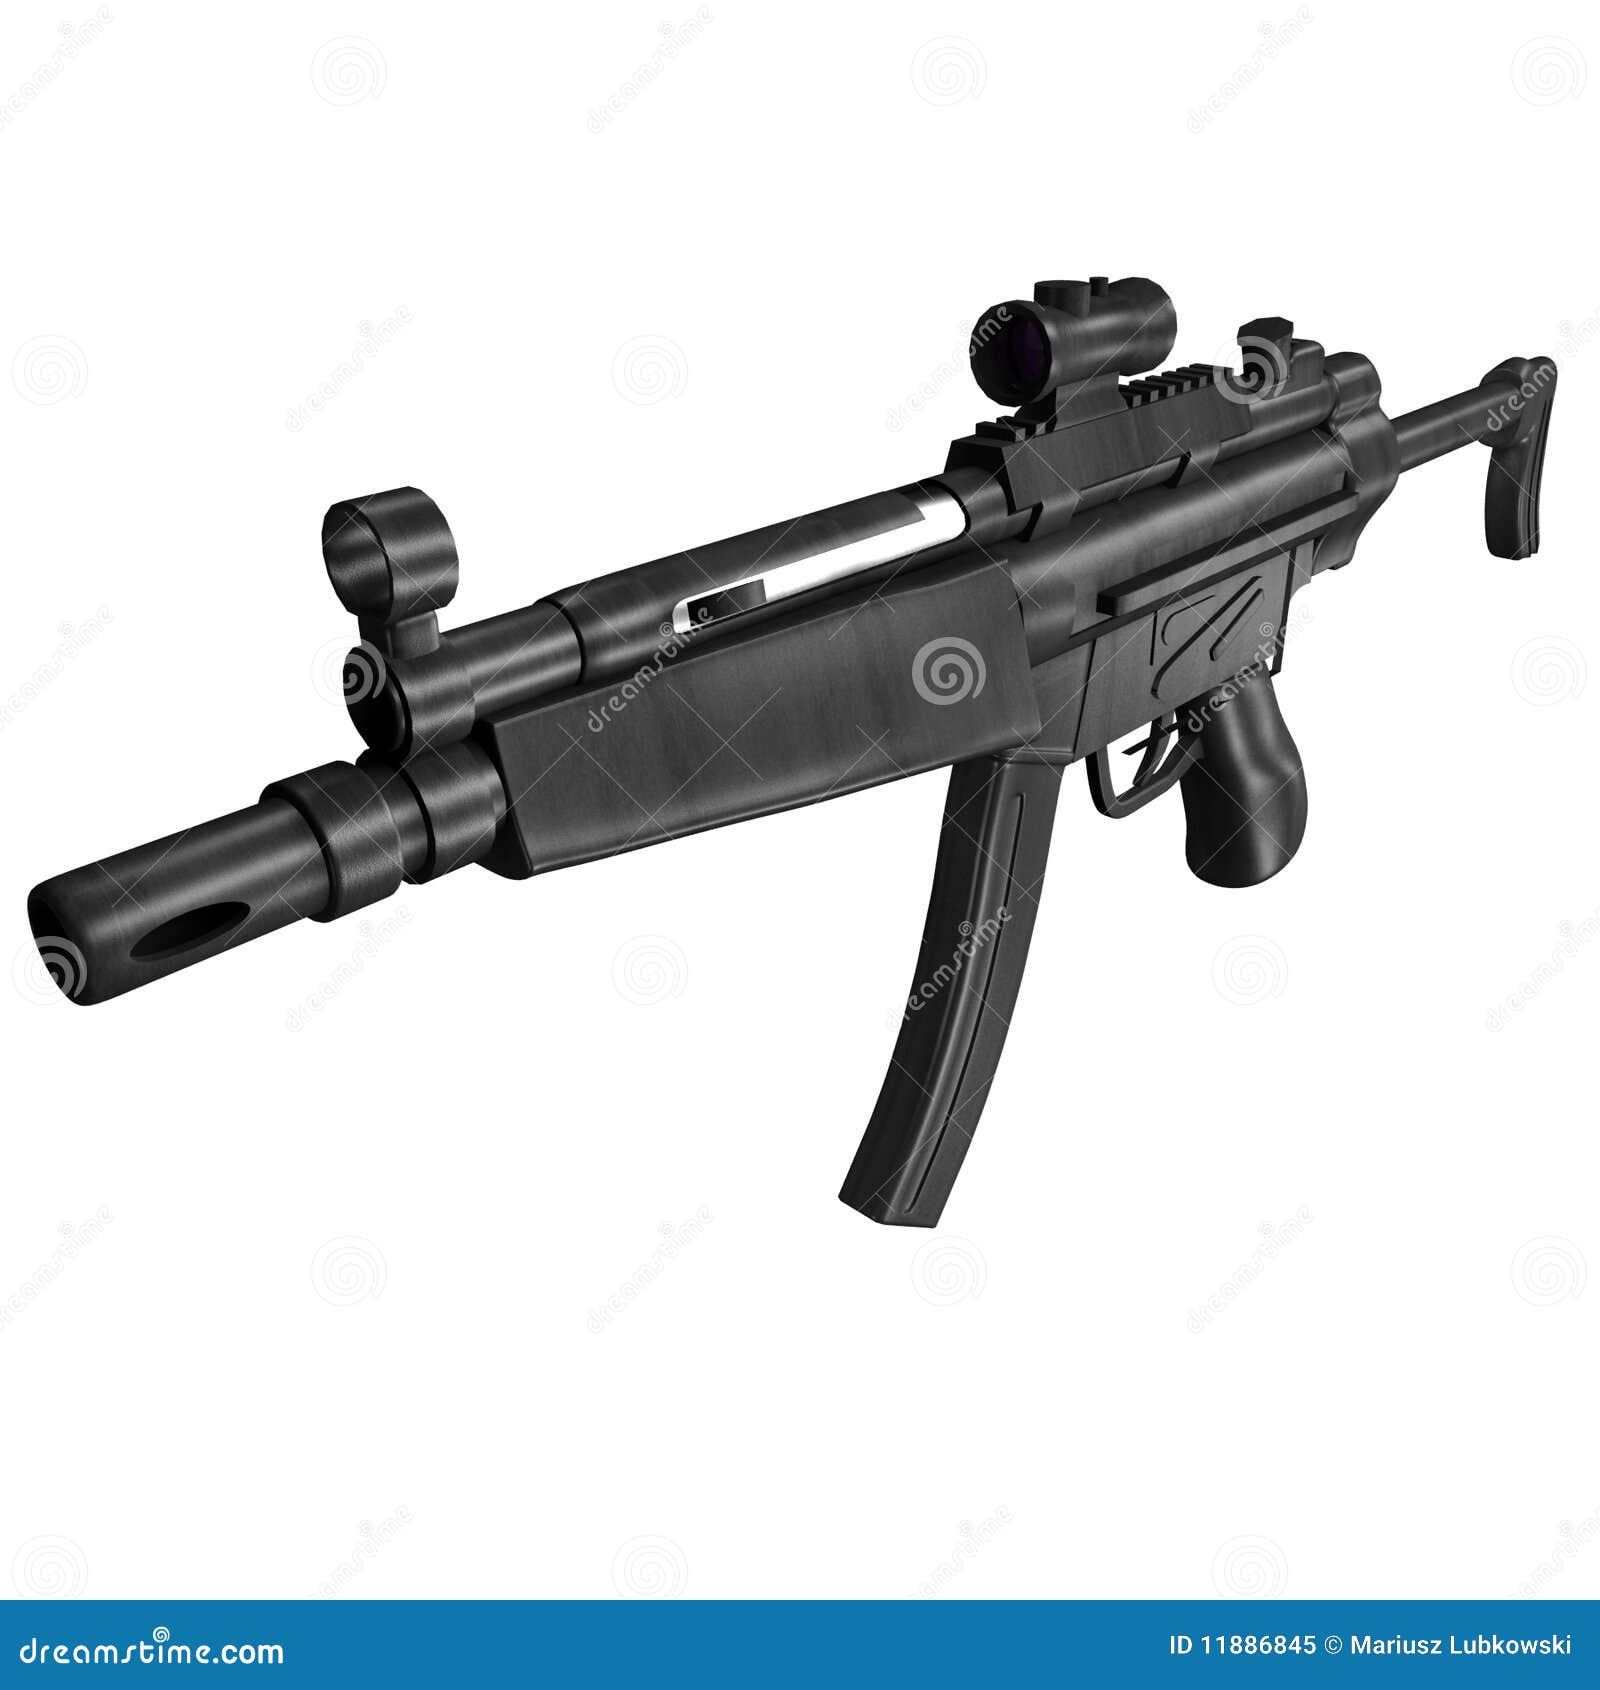 Heckler & Koch MP5A3 9mm Submachine Gun w/ Retractable Stock